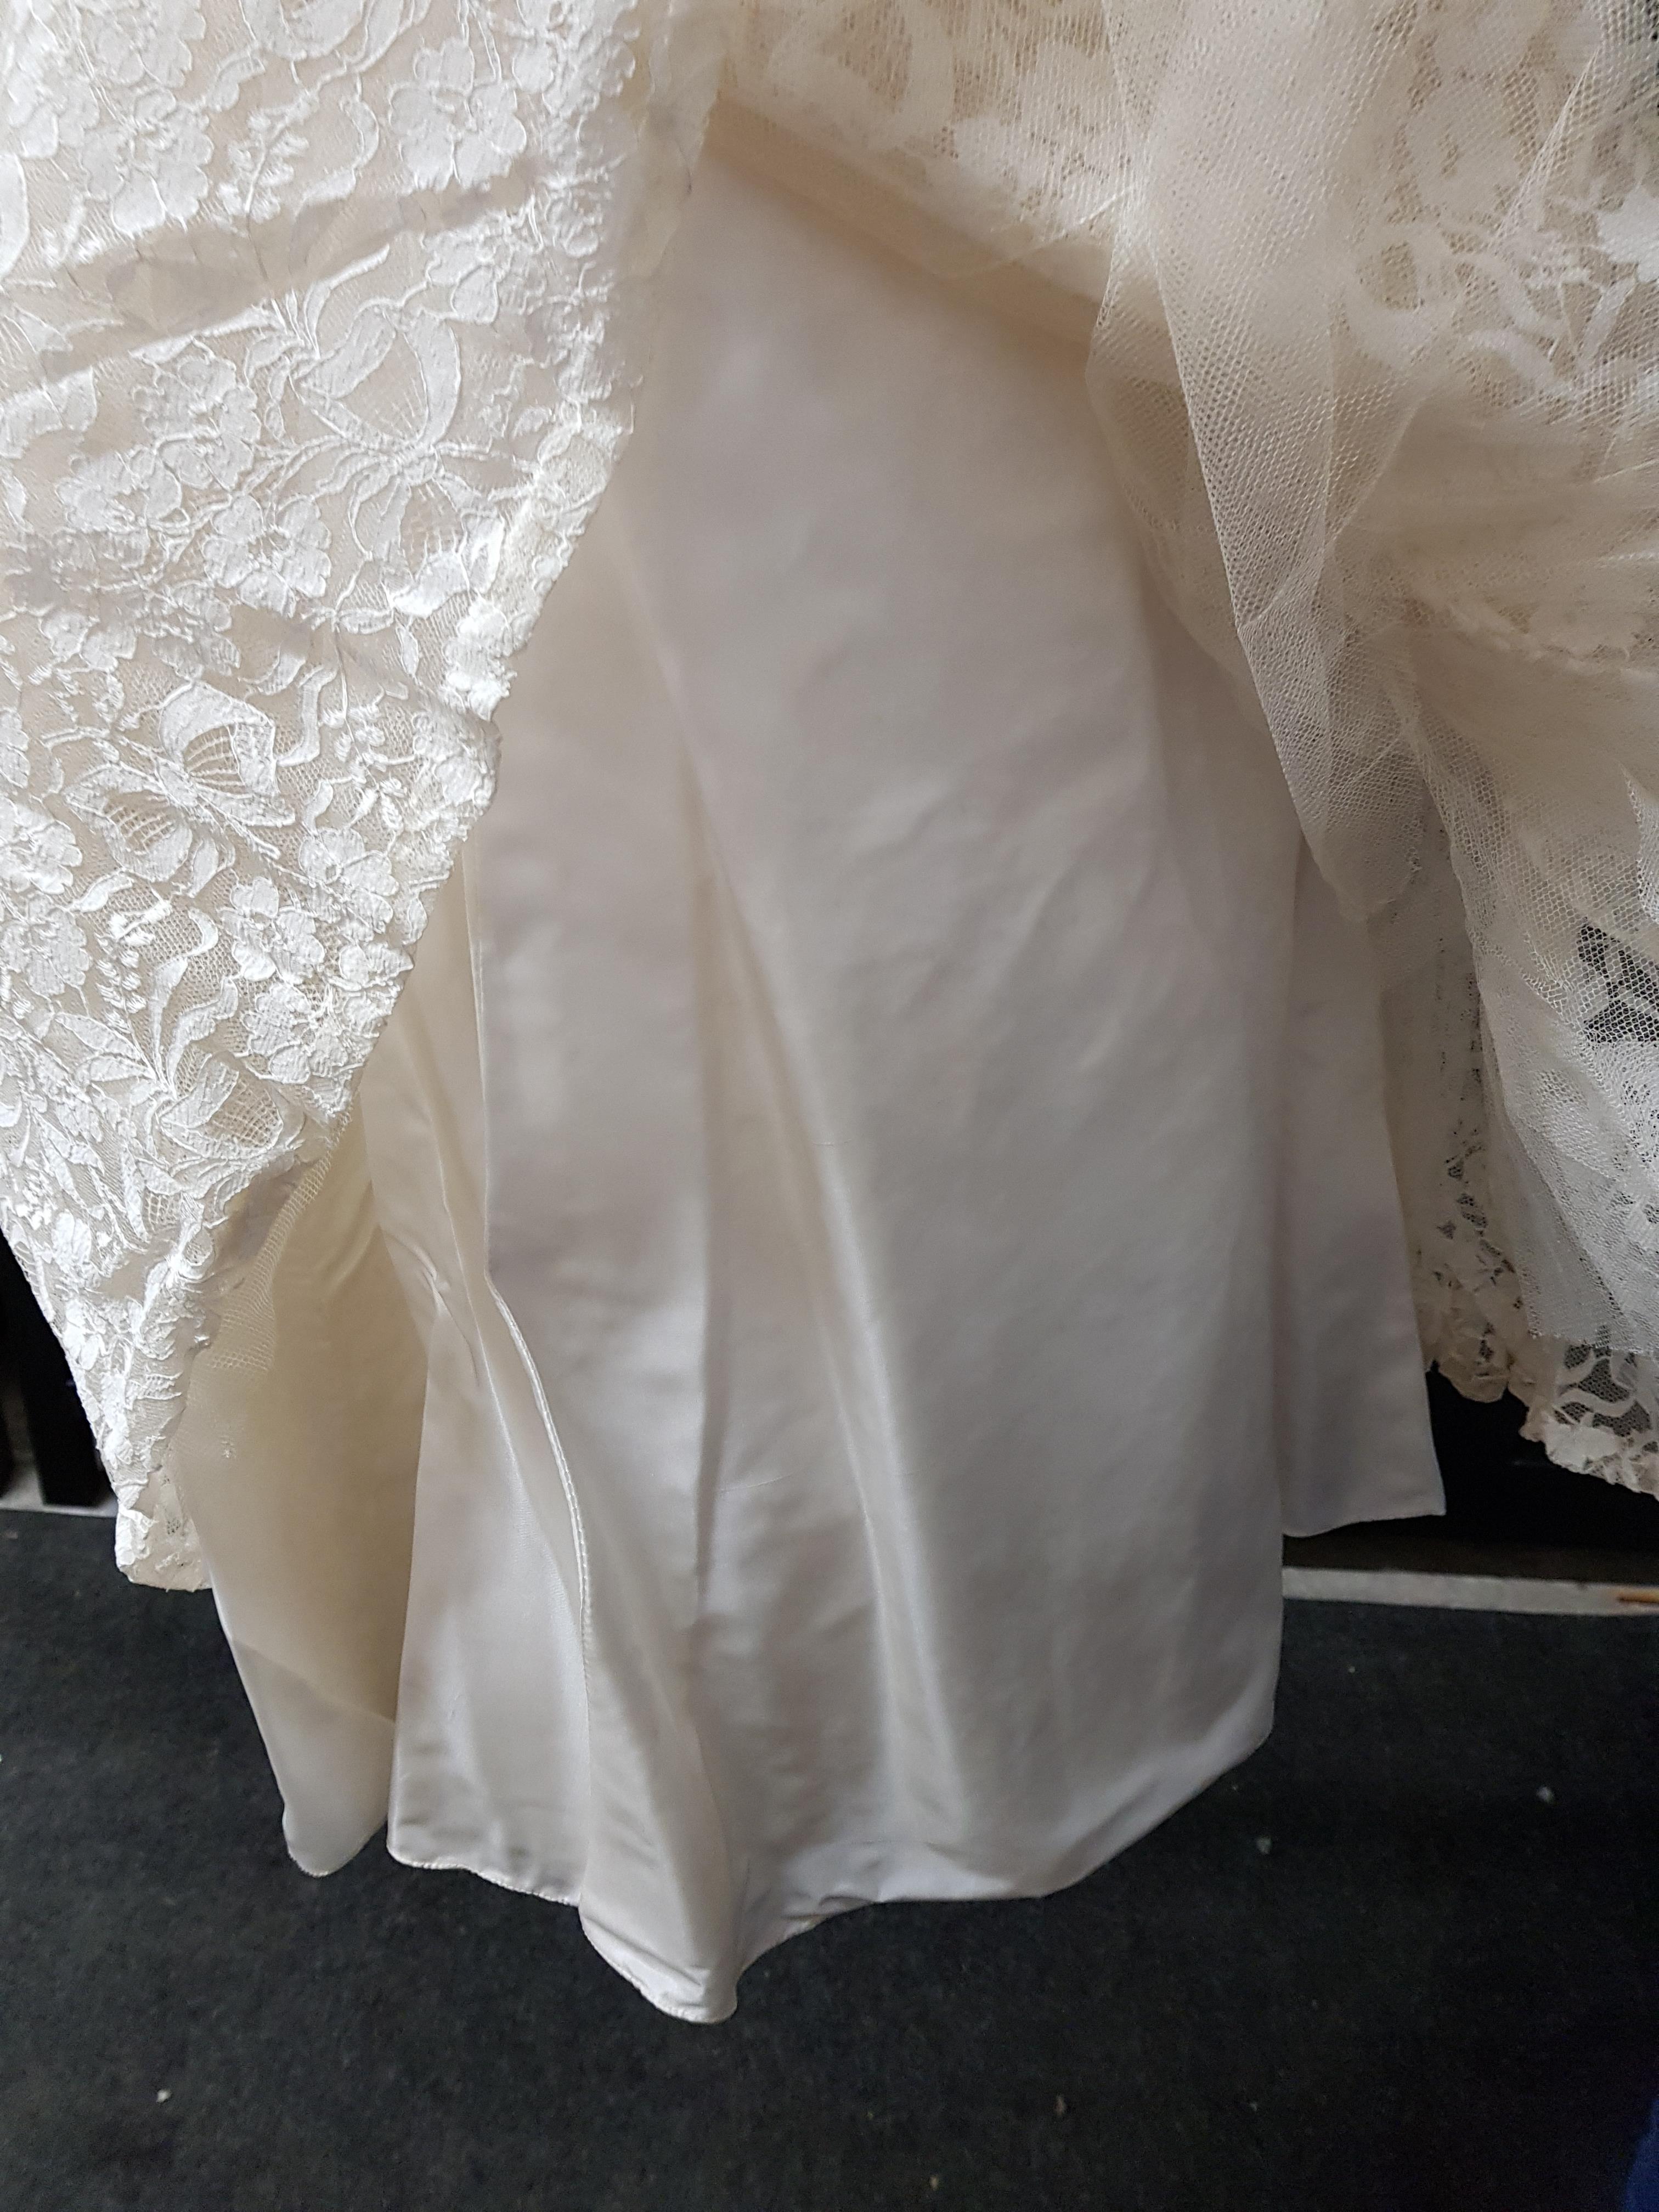 VINTAGE WEDDING DRESS IN ORIGINAL BOX - Image 4 of 8